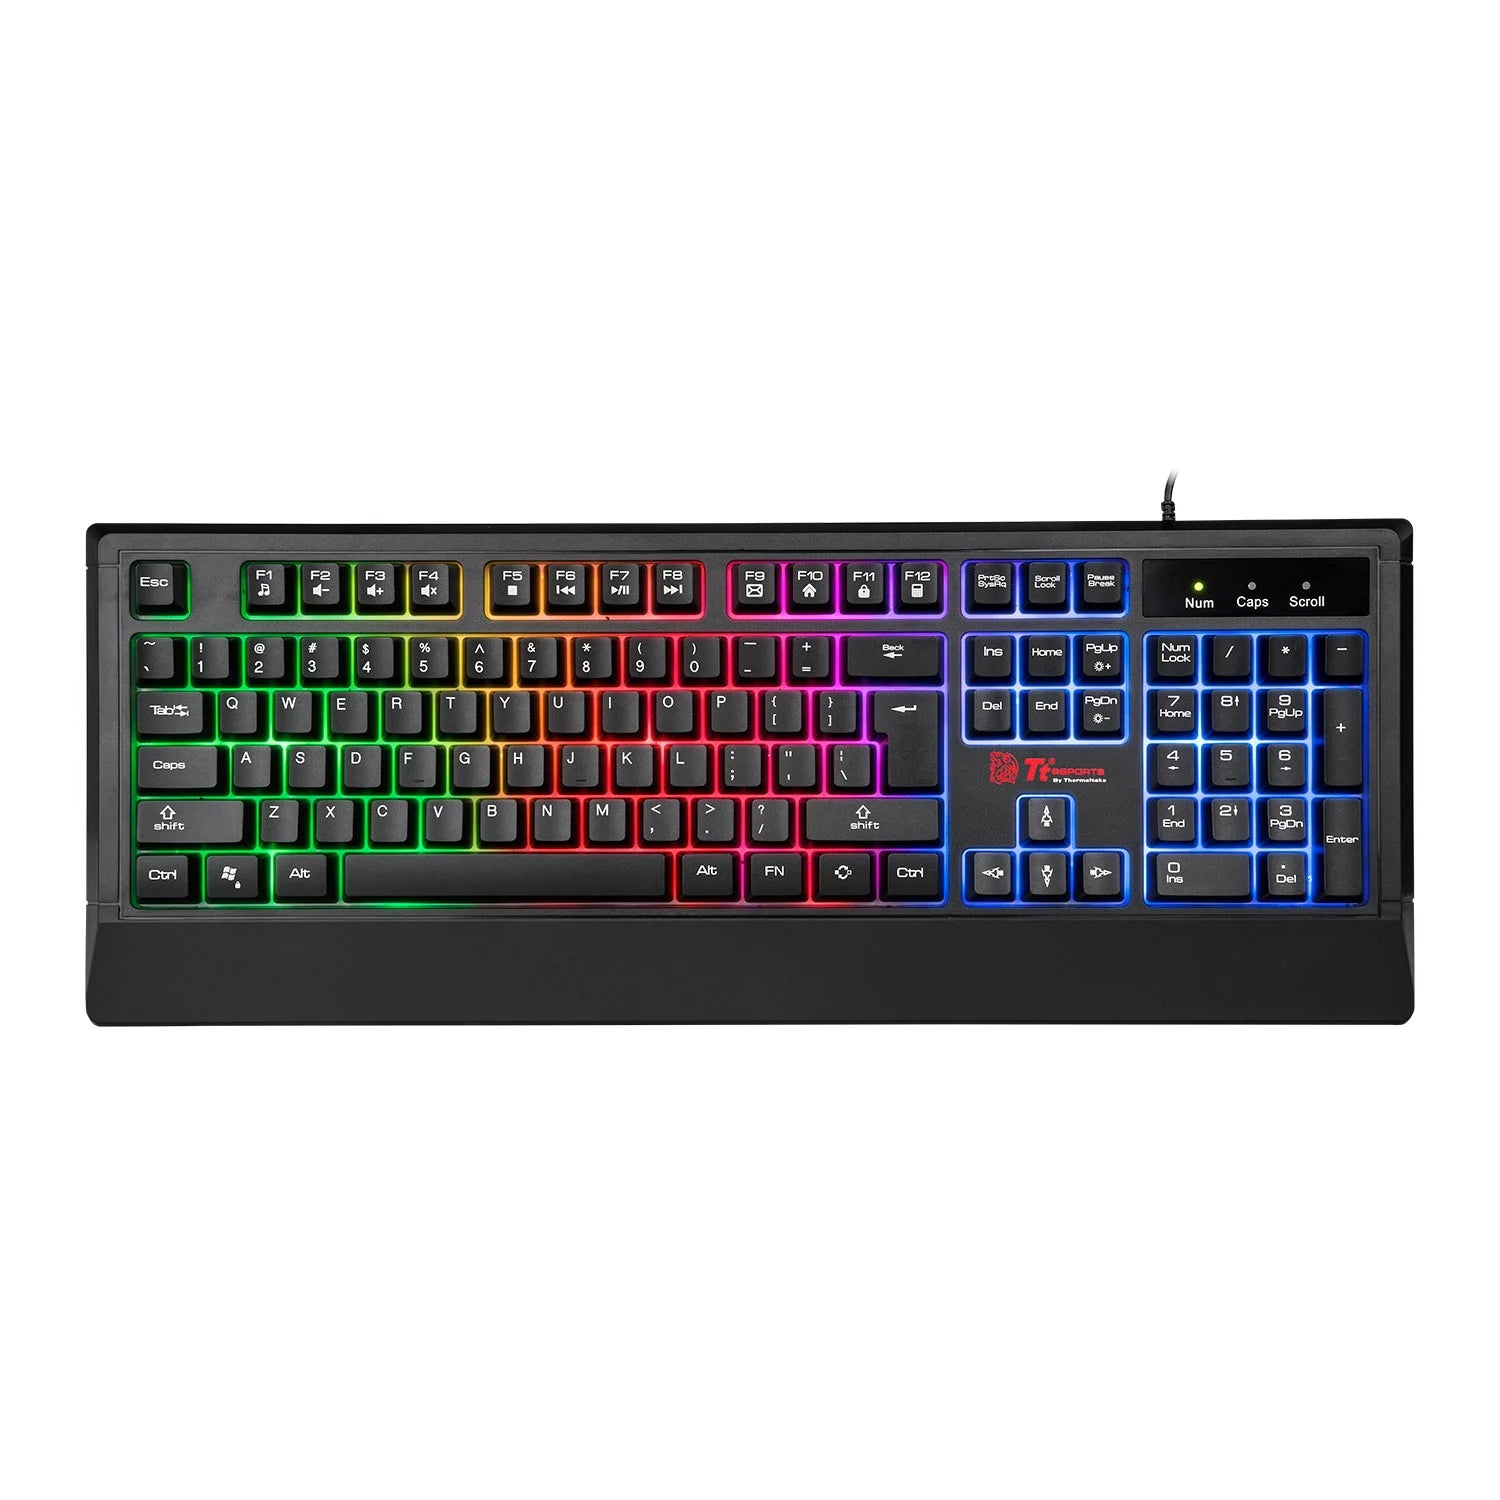 Thermaltake Tt Esports Challenger mix-RGB Gaming Keyboard & Mouse Combo